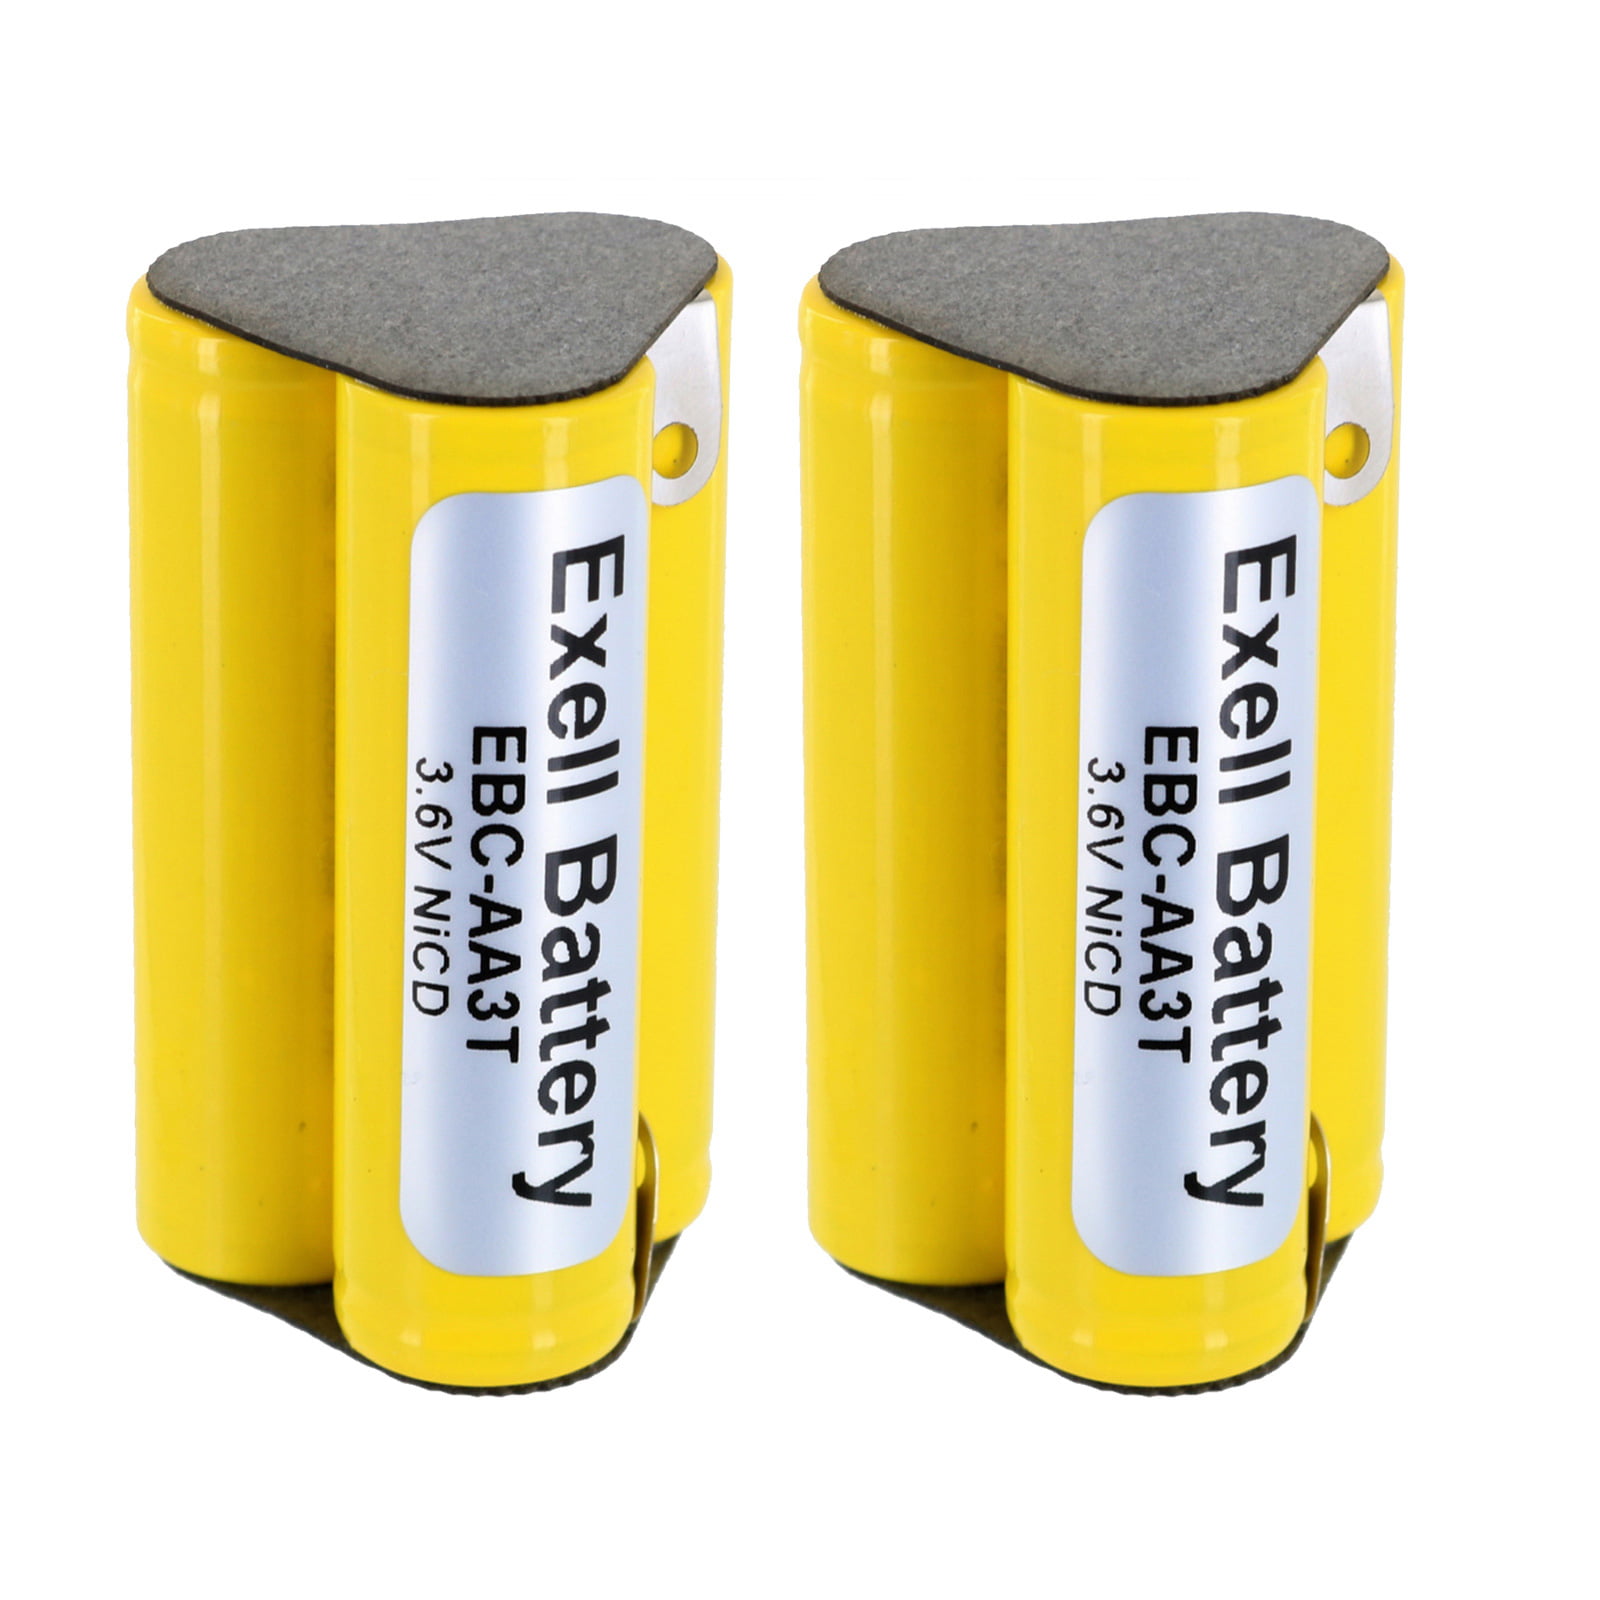 Battery pack 6. 2xaa батарейки. Паки АКБ. Battery Pack. 9sx5kirt Battery Pack.